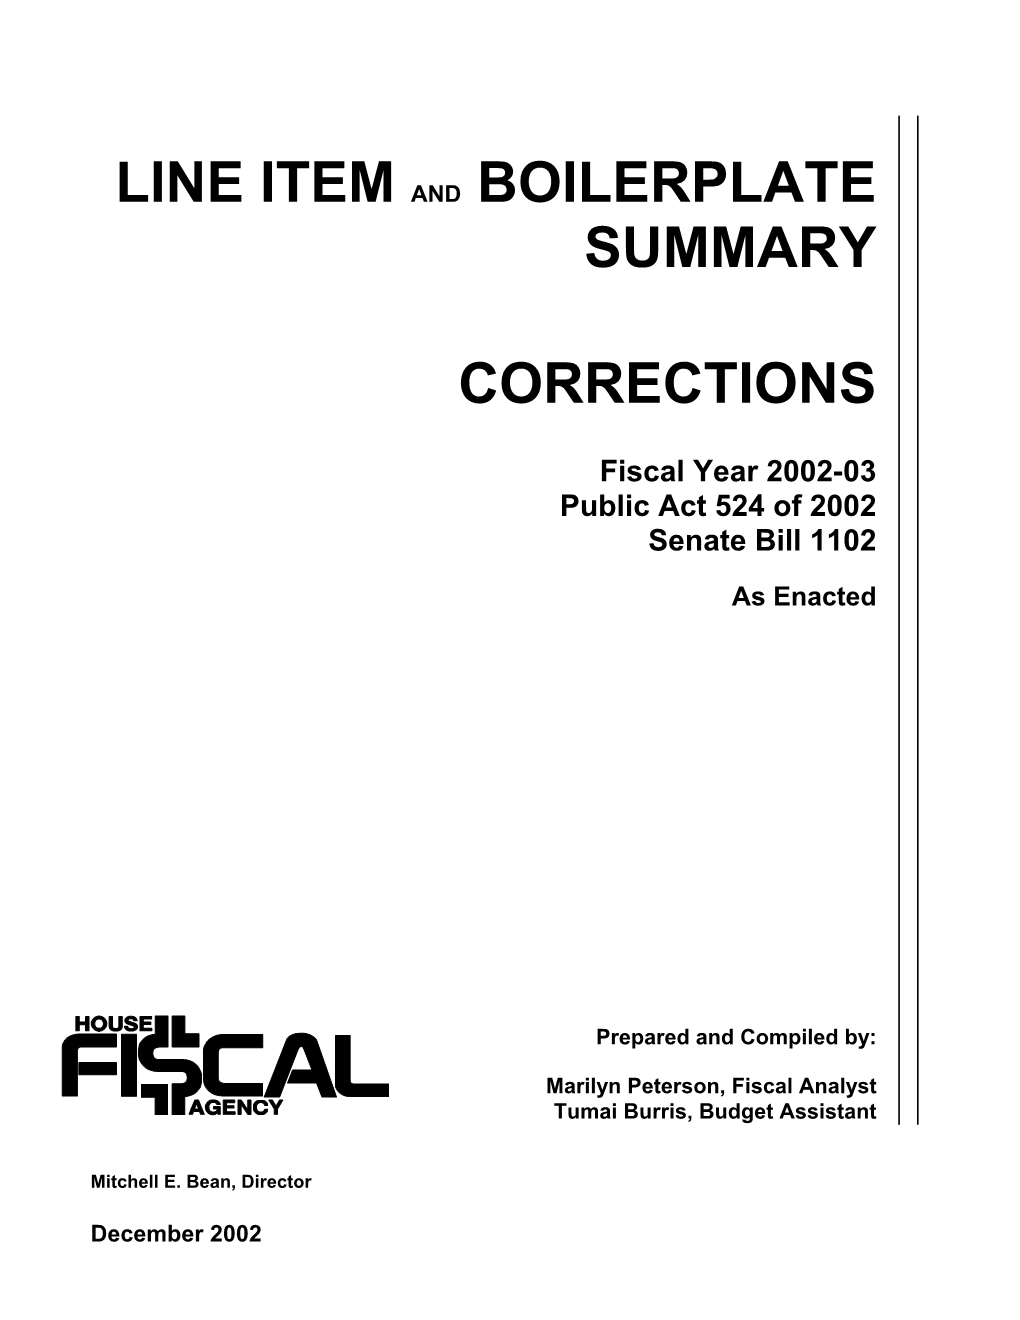 Corrections Line Item Summary FY 2002-03